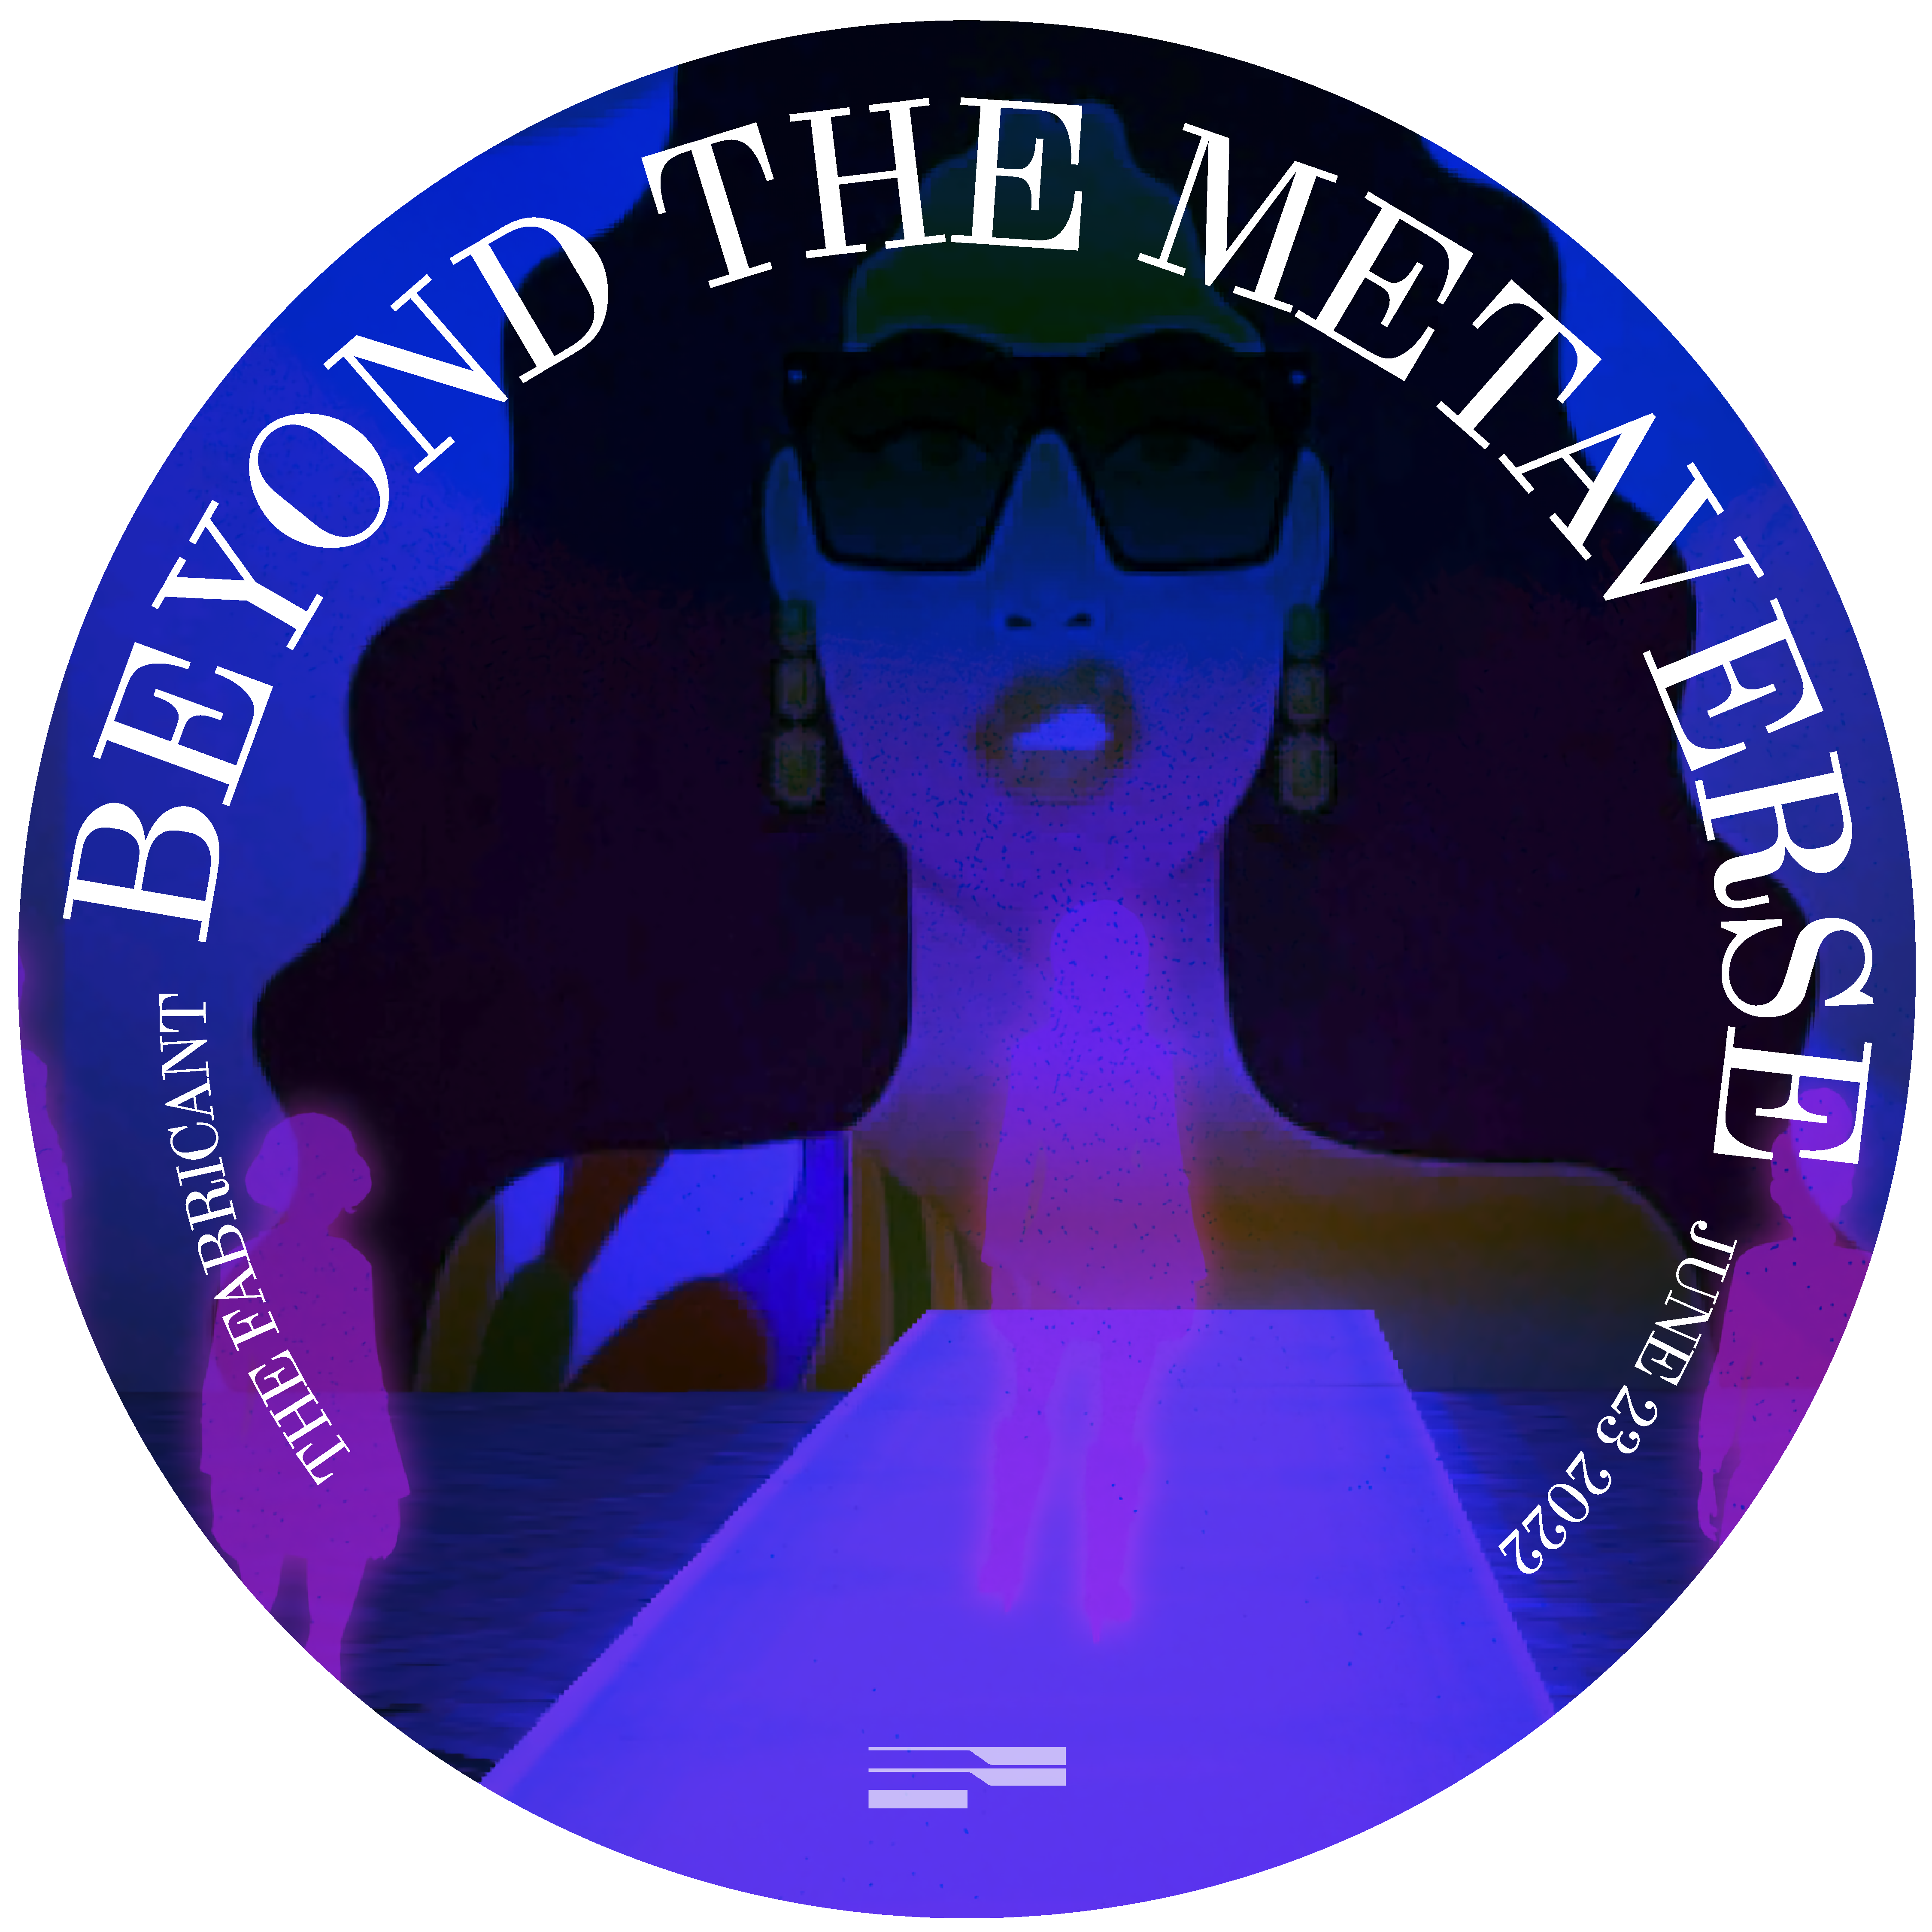 Beyond the Metaverse! Virtual event asset